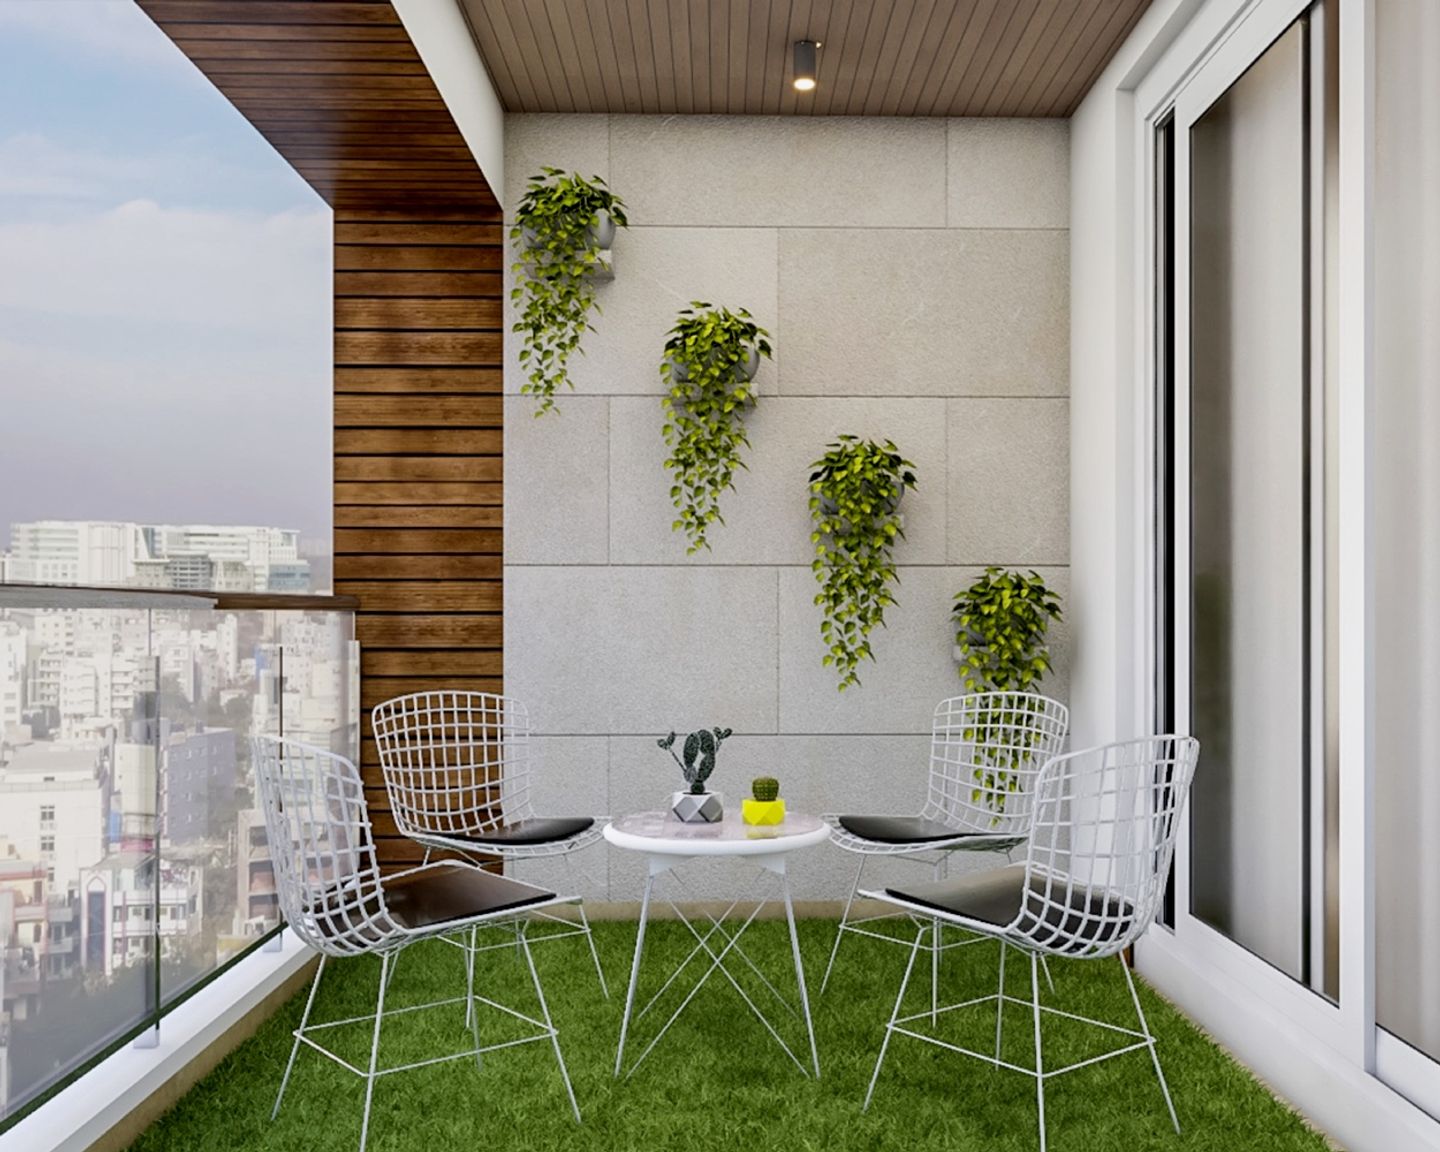 6X9 Ft Tropical Balcony Design With Grass Flooring - Livspace